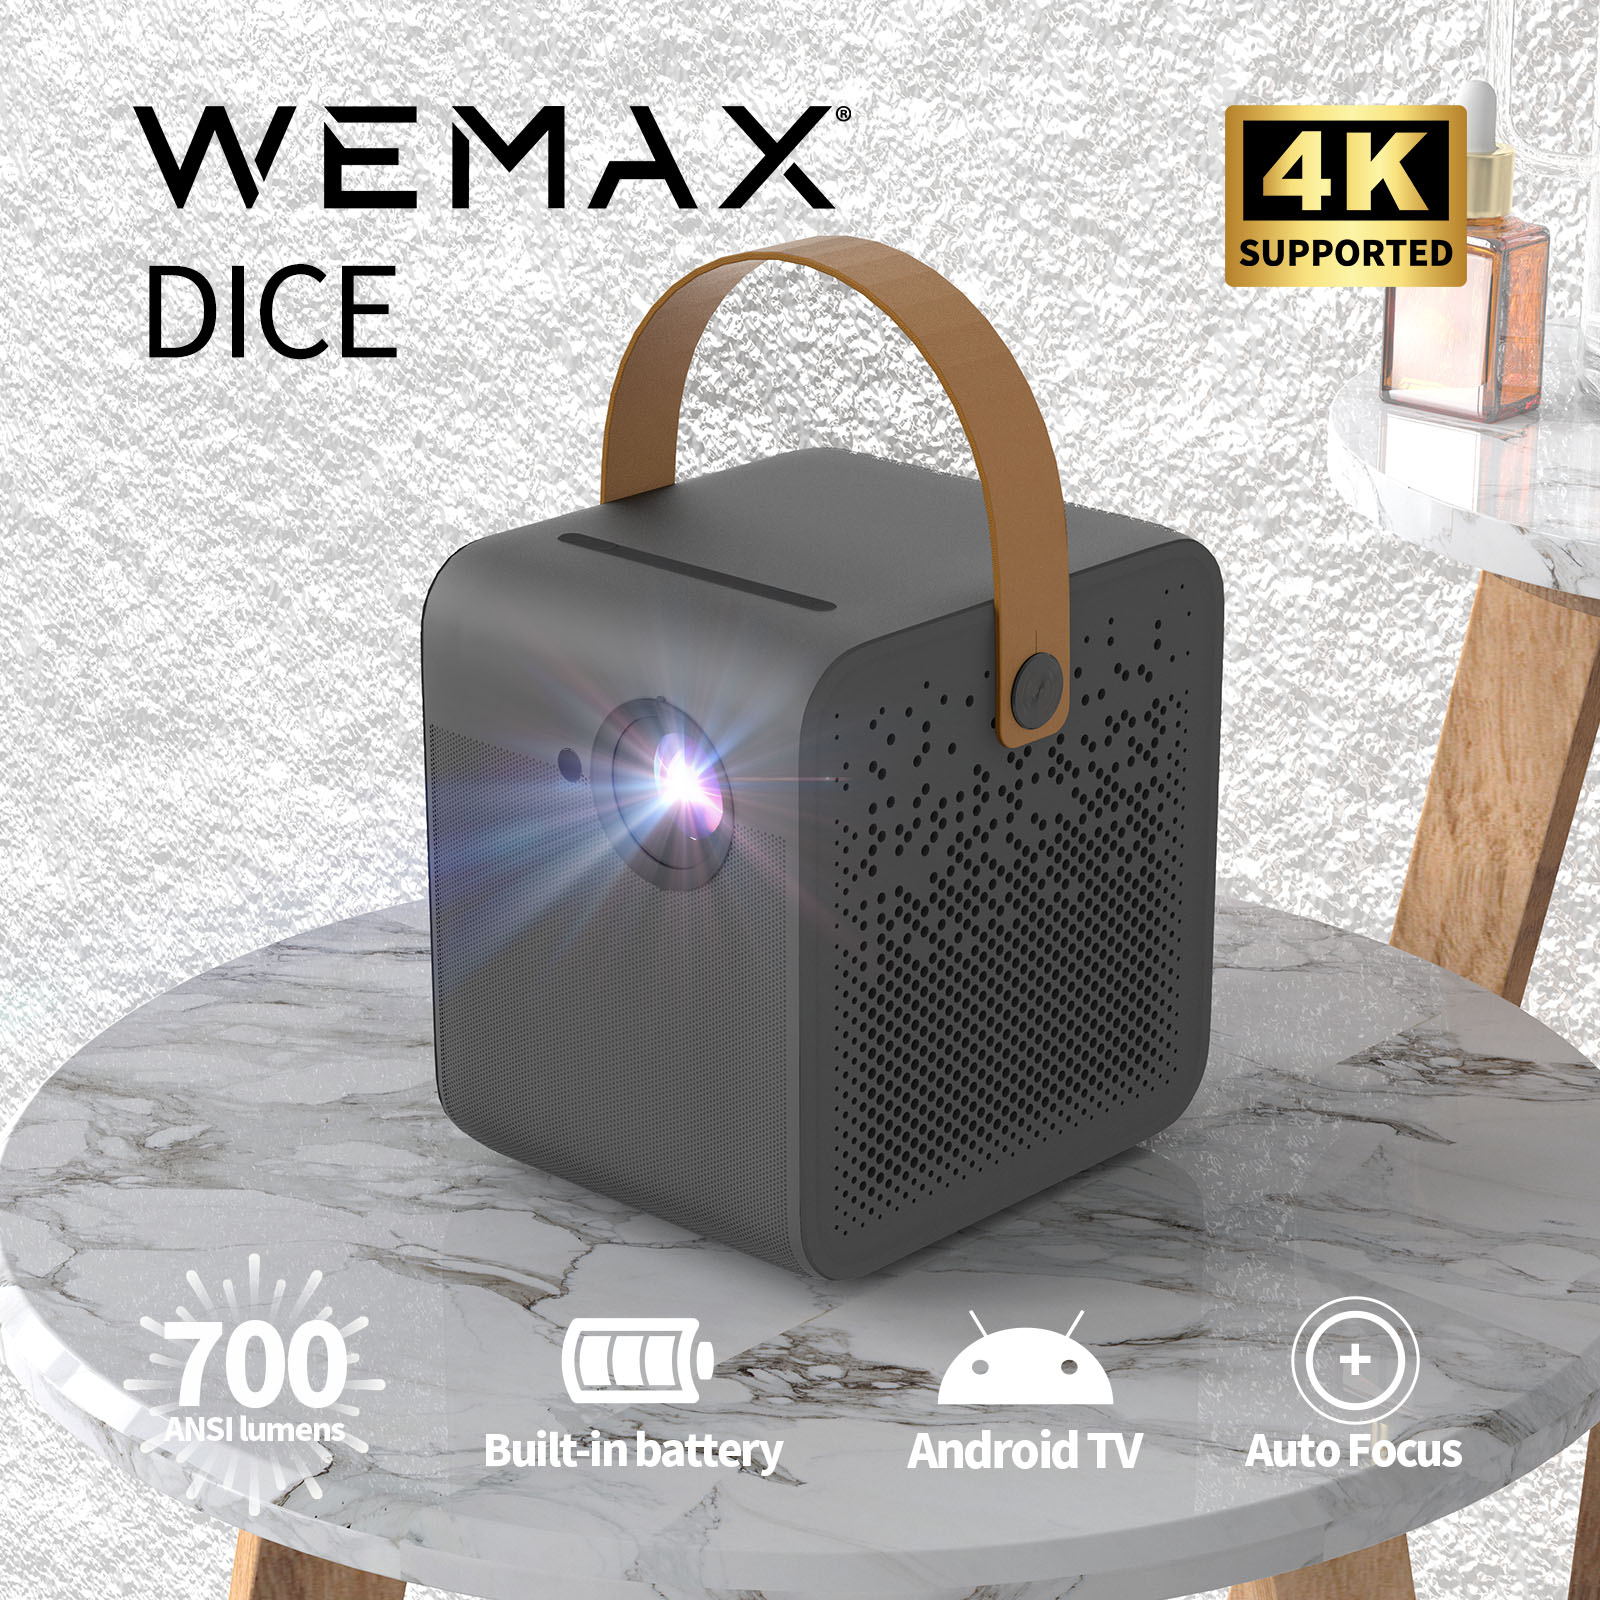 WEMAX DICE 700 ANSI Lumens 1080P